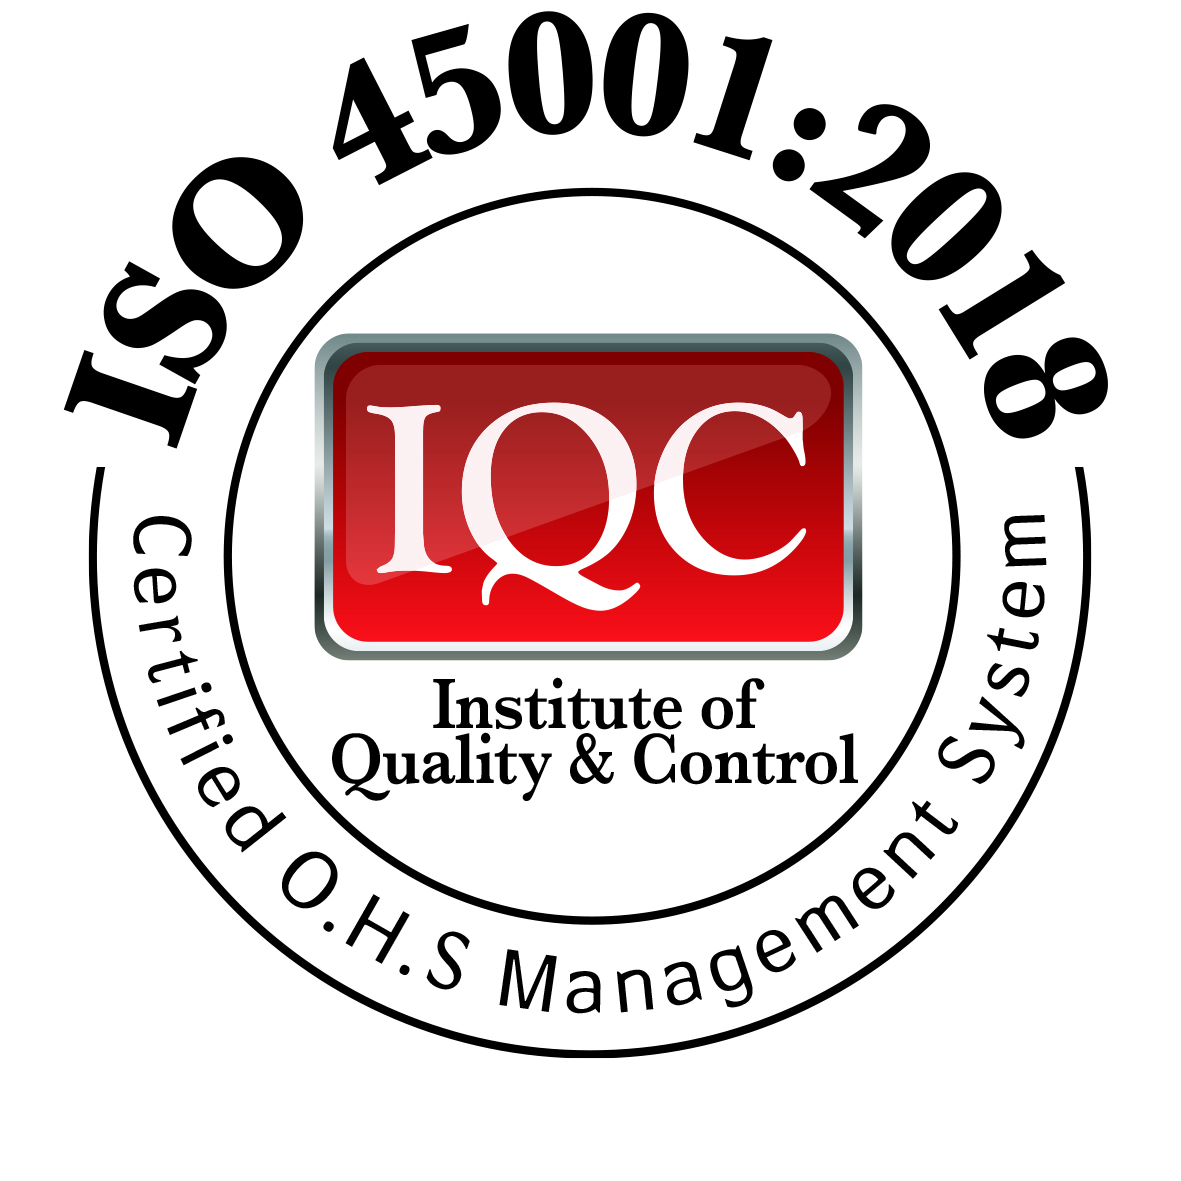 ISO45001 LOGO - IQC